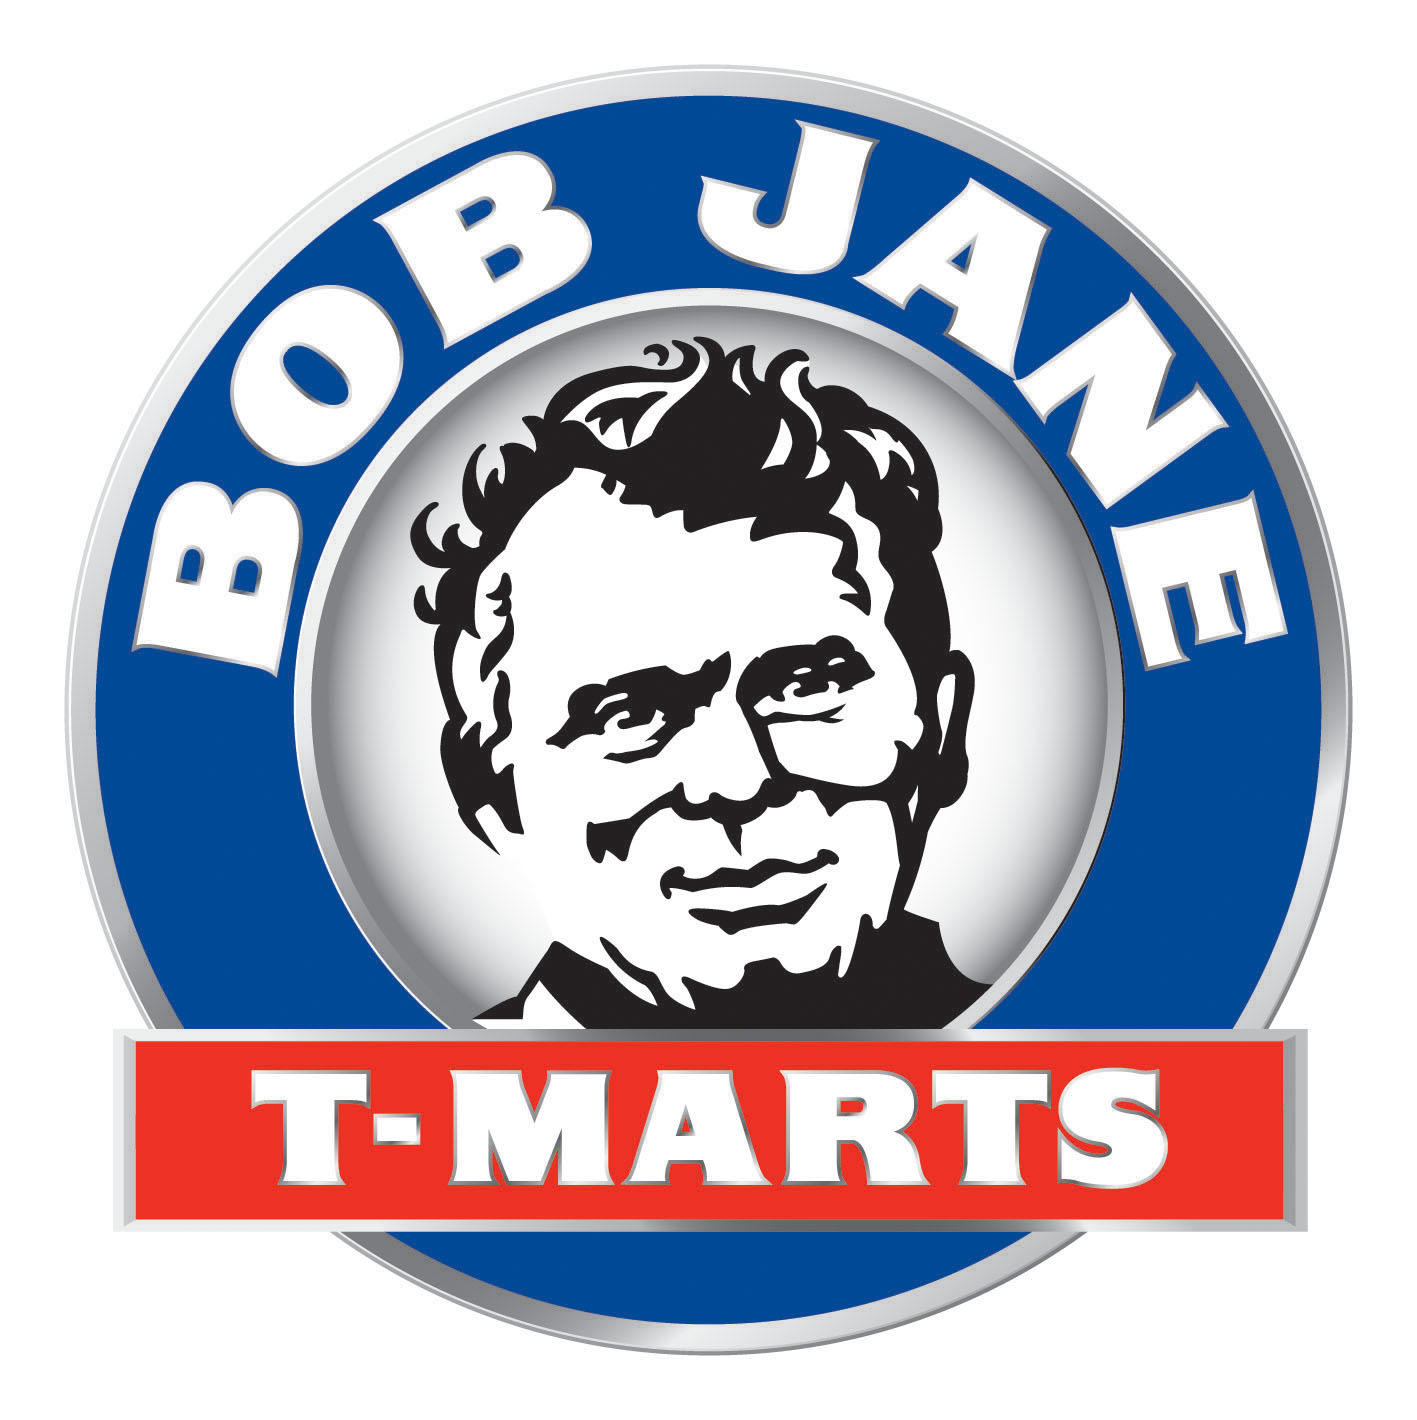 Bob Jane T-Marts Newcastle Newcastle